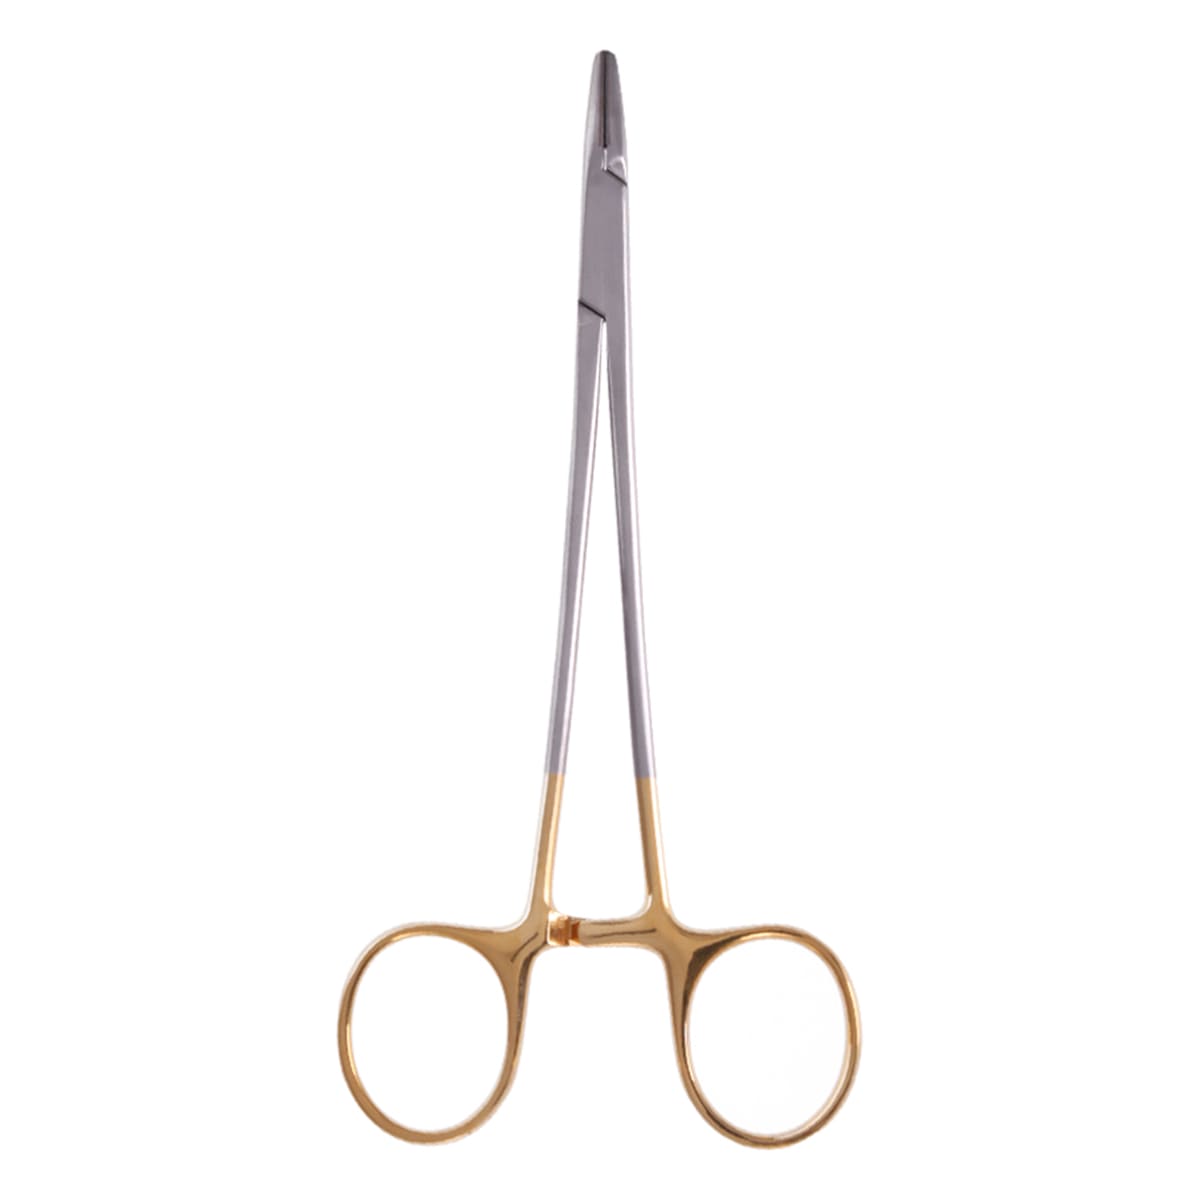 Crilewood (Debakey) Needle Holder – Zepf Surgical Instruments